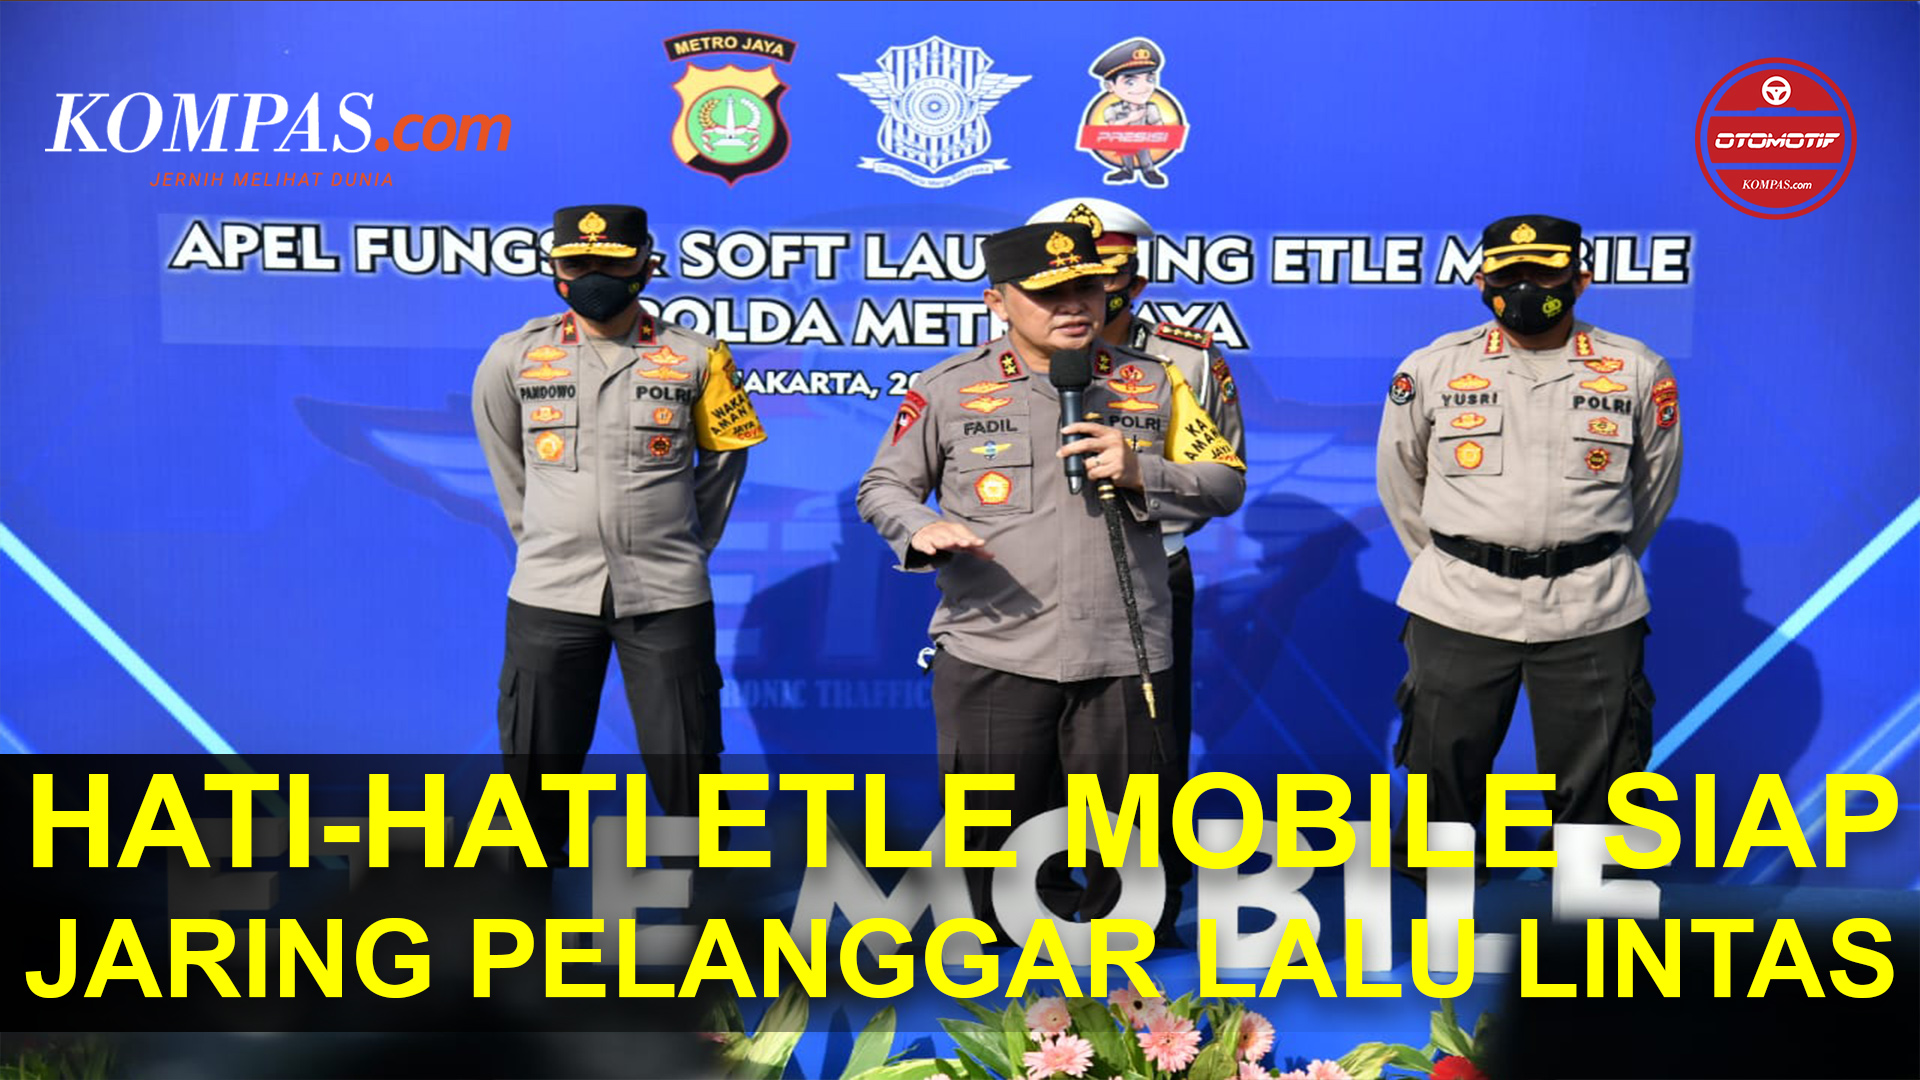 Polda Metro Jaya Resmi Luncurkan ETLE Mobile